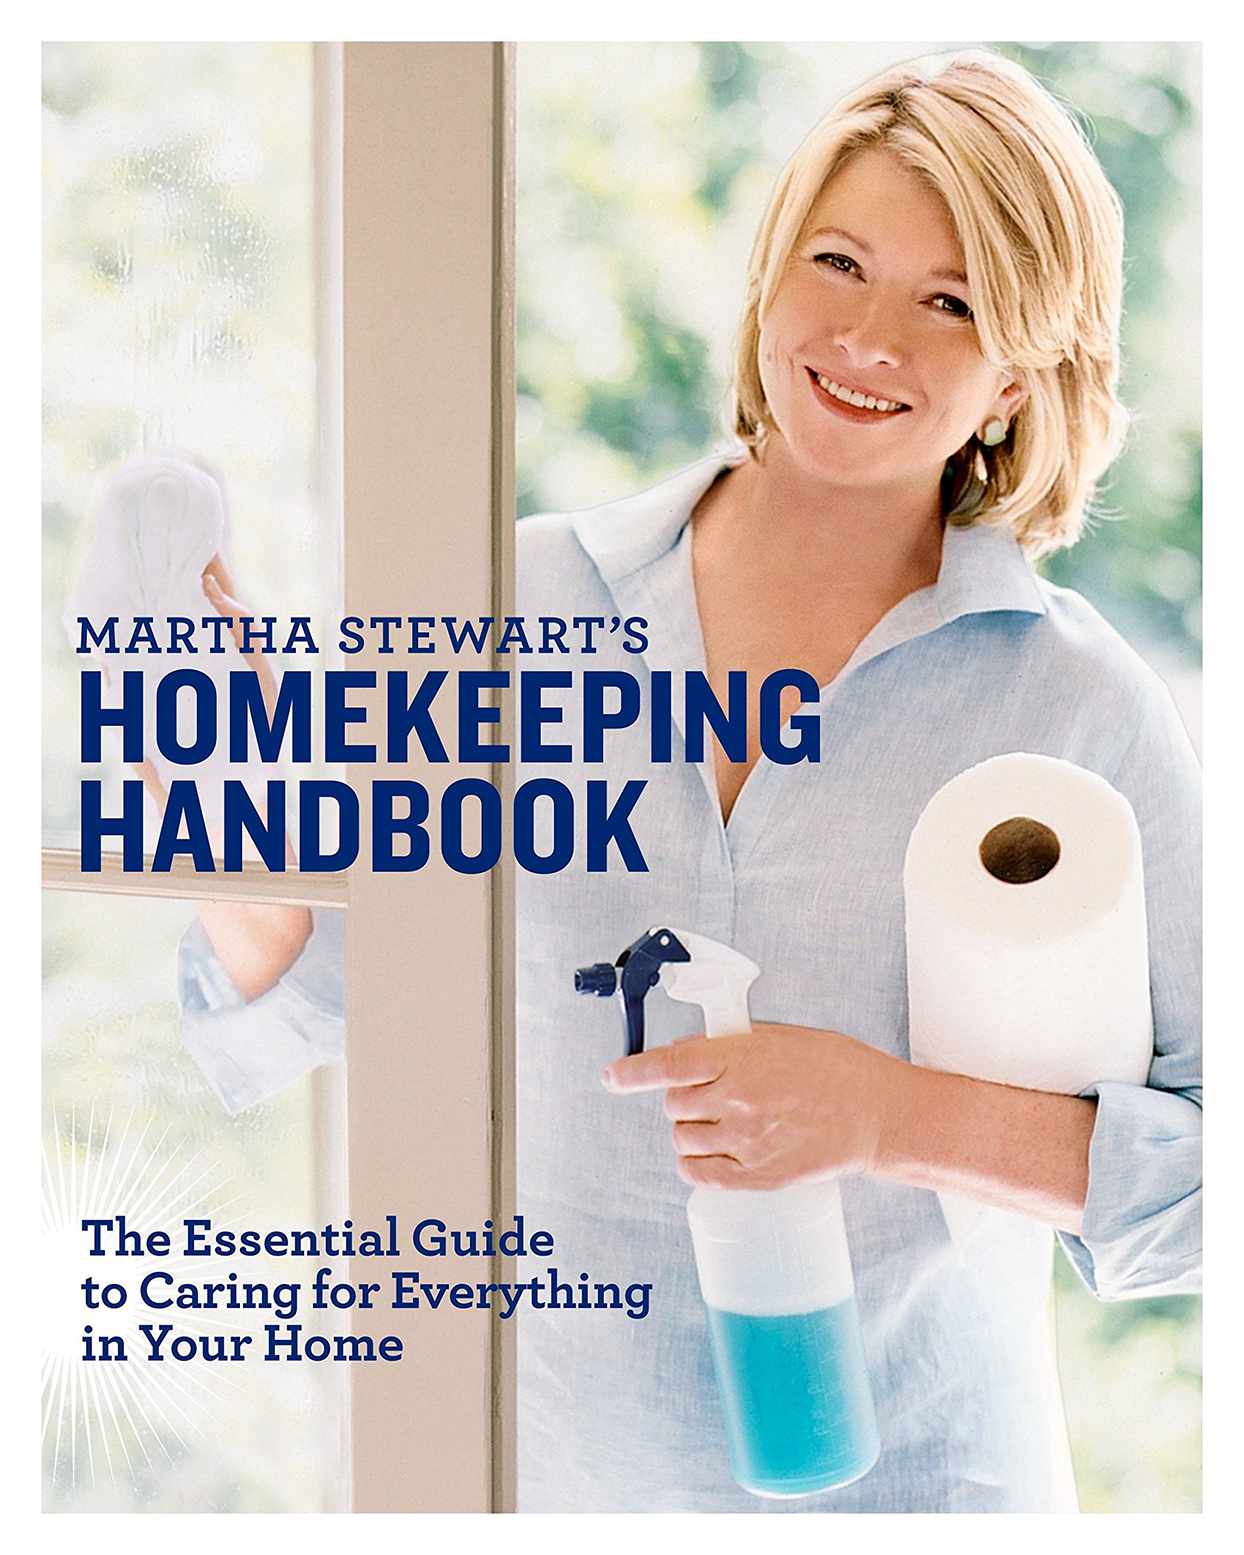 Martha Stewart's Homekeeping Handbook 2006 book cover